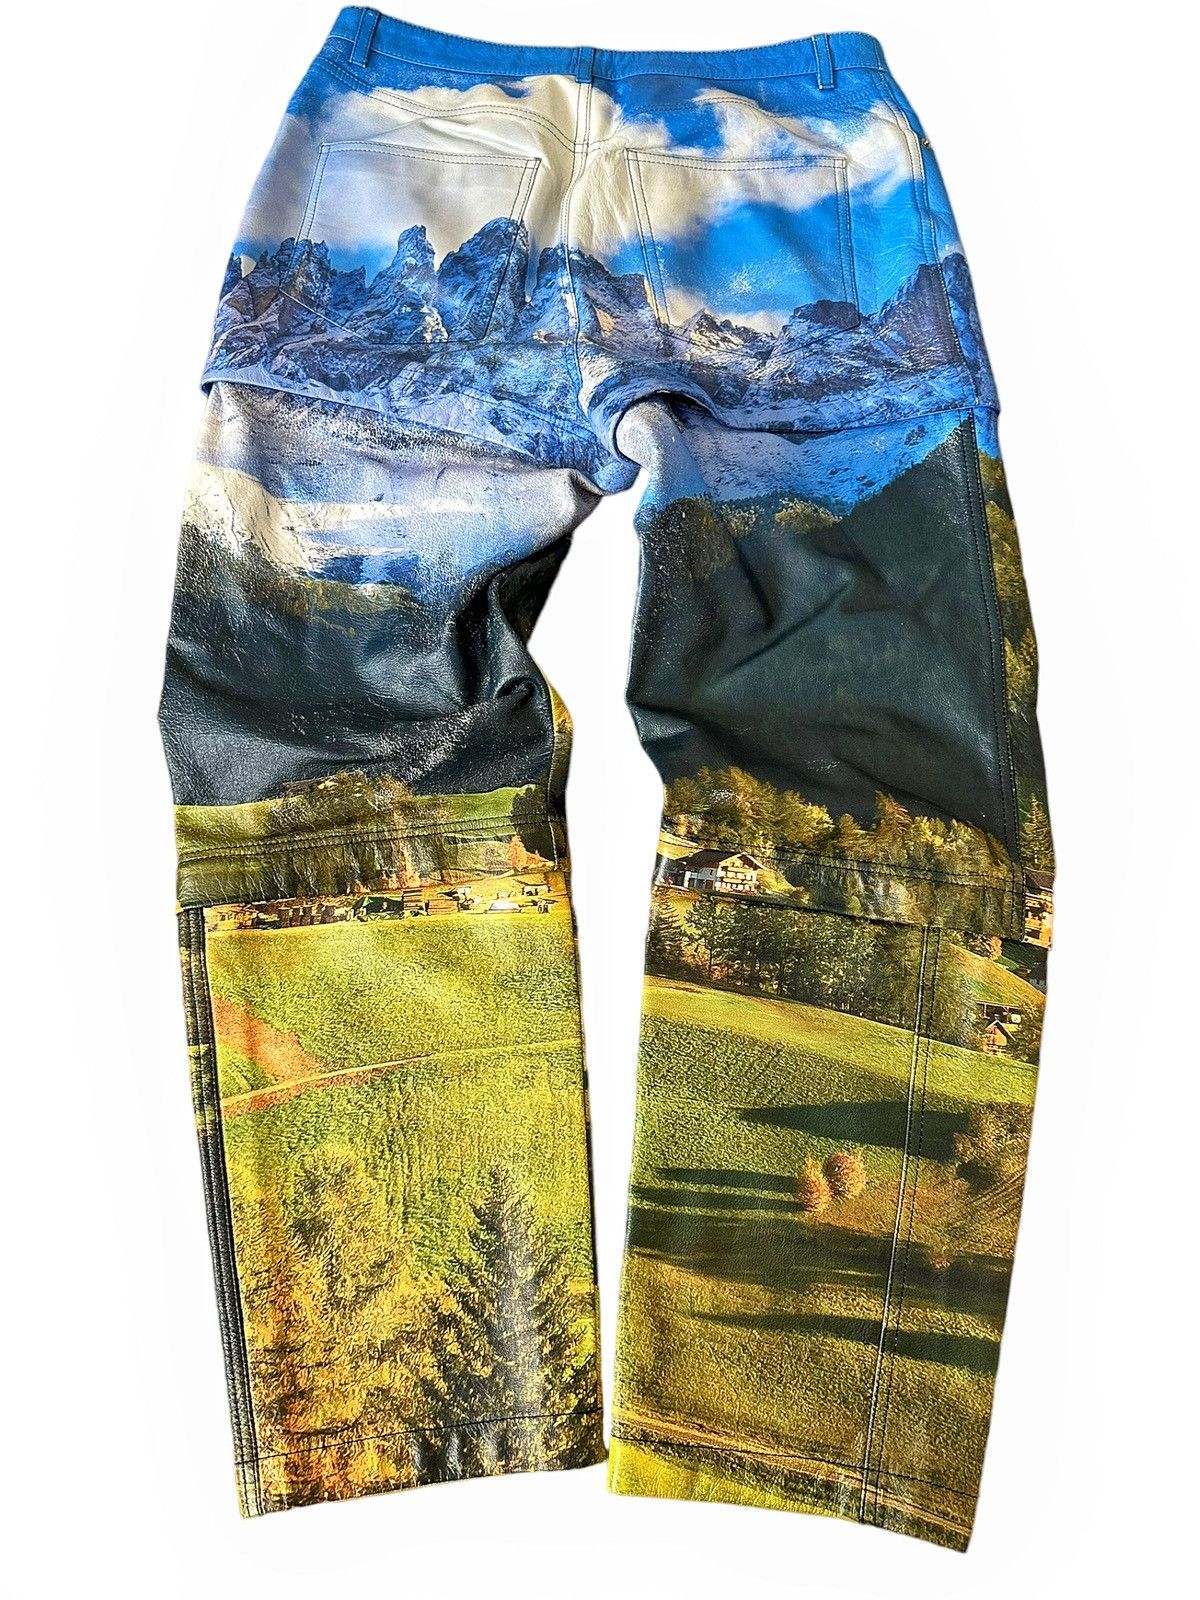 Balenciaga GRAIL 2018 Convertible Painted Calfskin Mountain Pants Size US 32 / EU 48 - 2 Preview